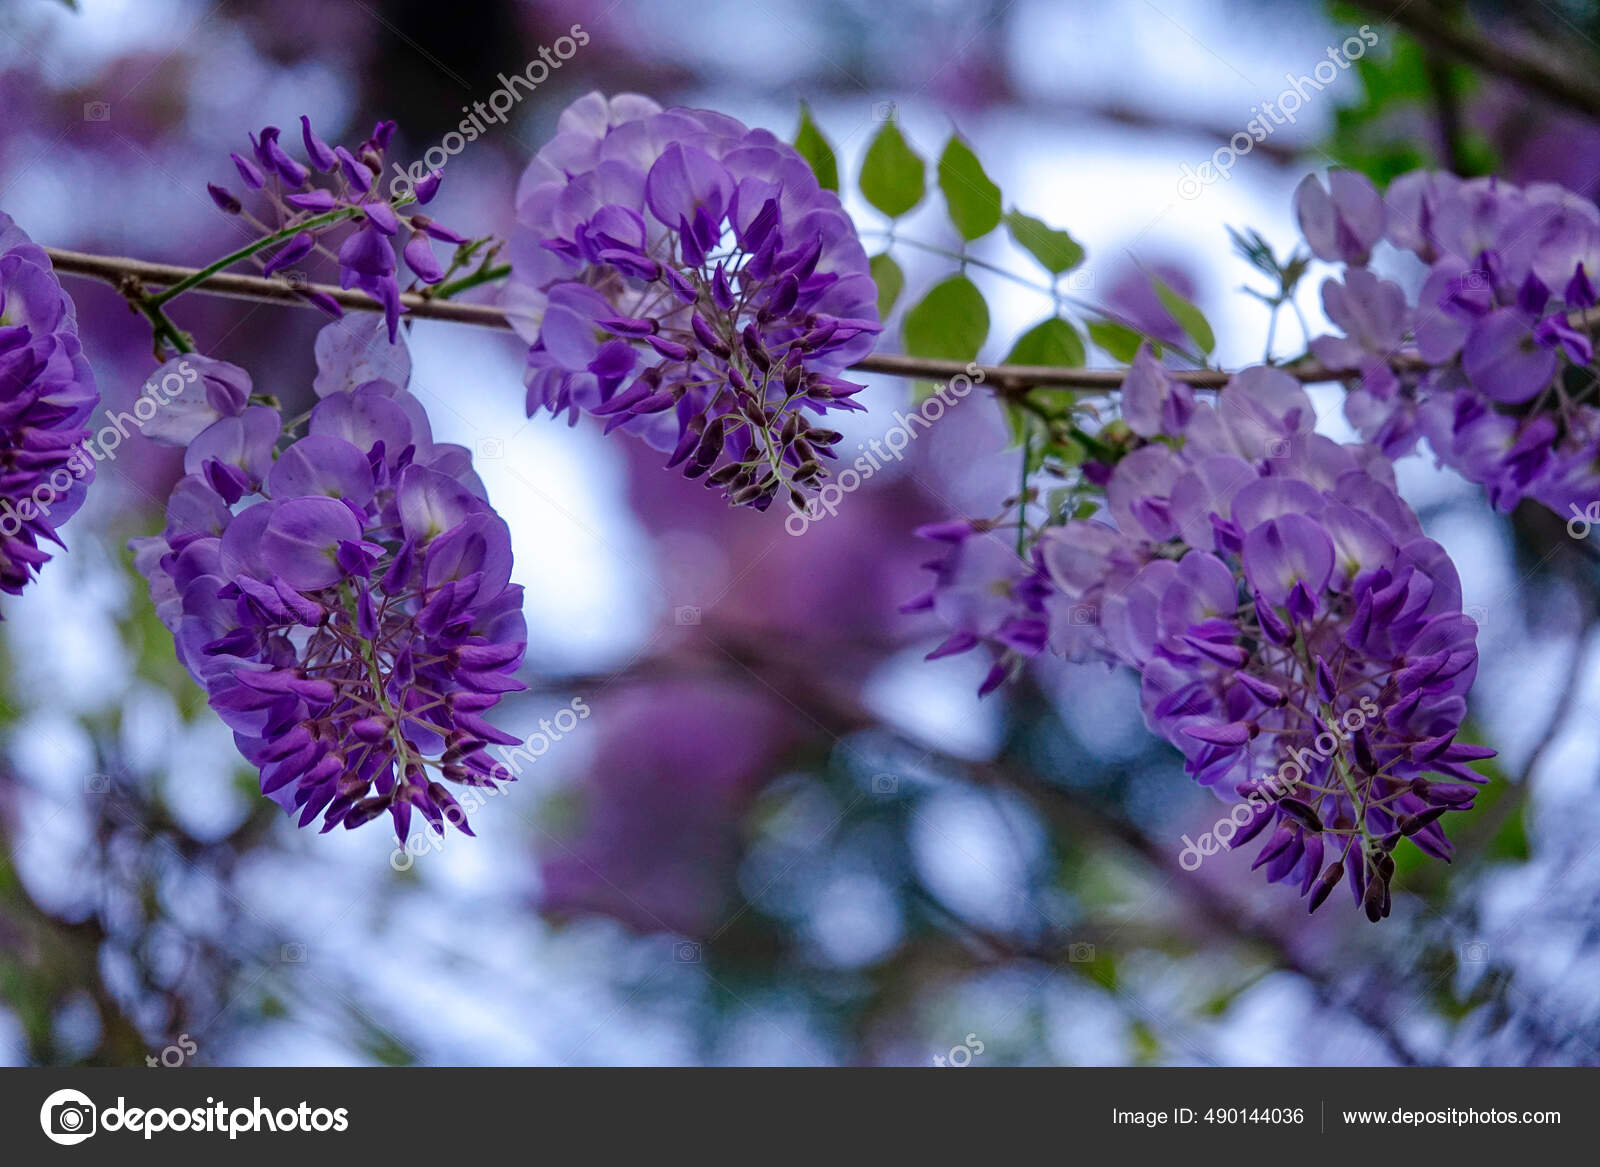 CERRAR: Vista detallada de una hermosa flor púrpura de un cedro.:  fotografía de stock © Prostock #490144036 | Depositphotos